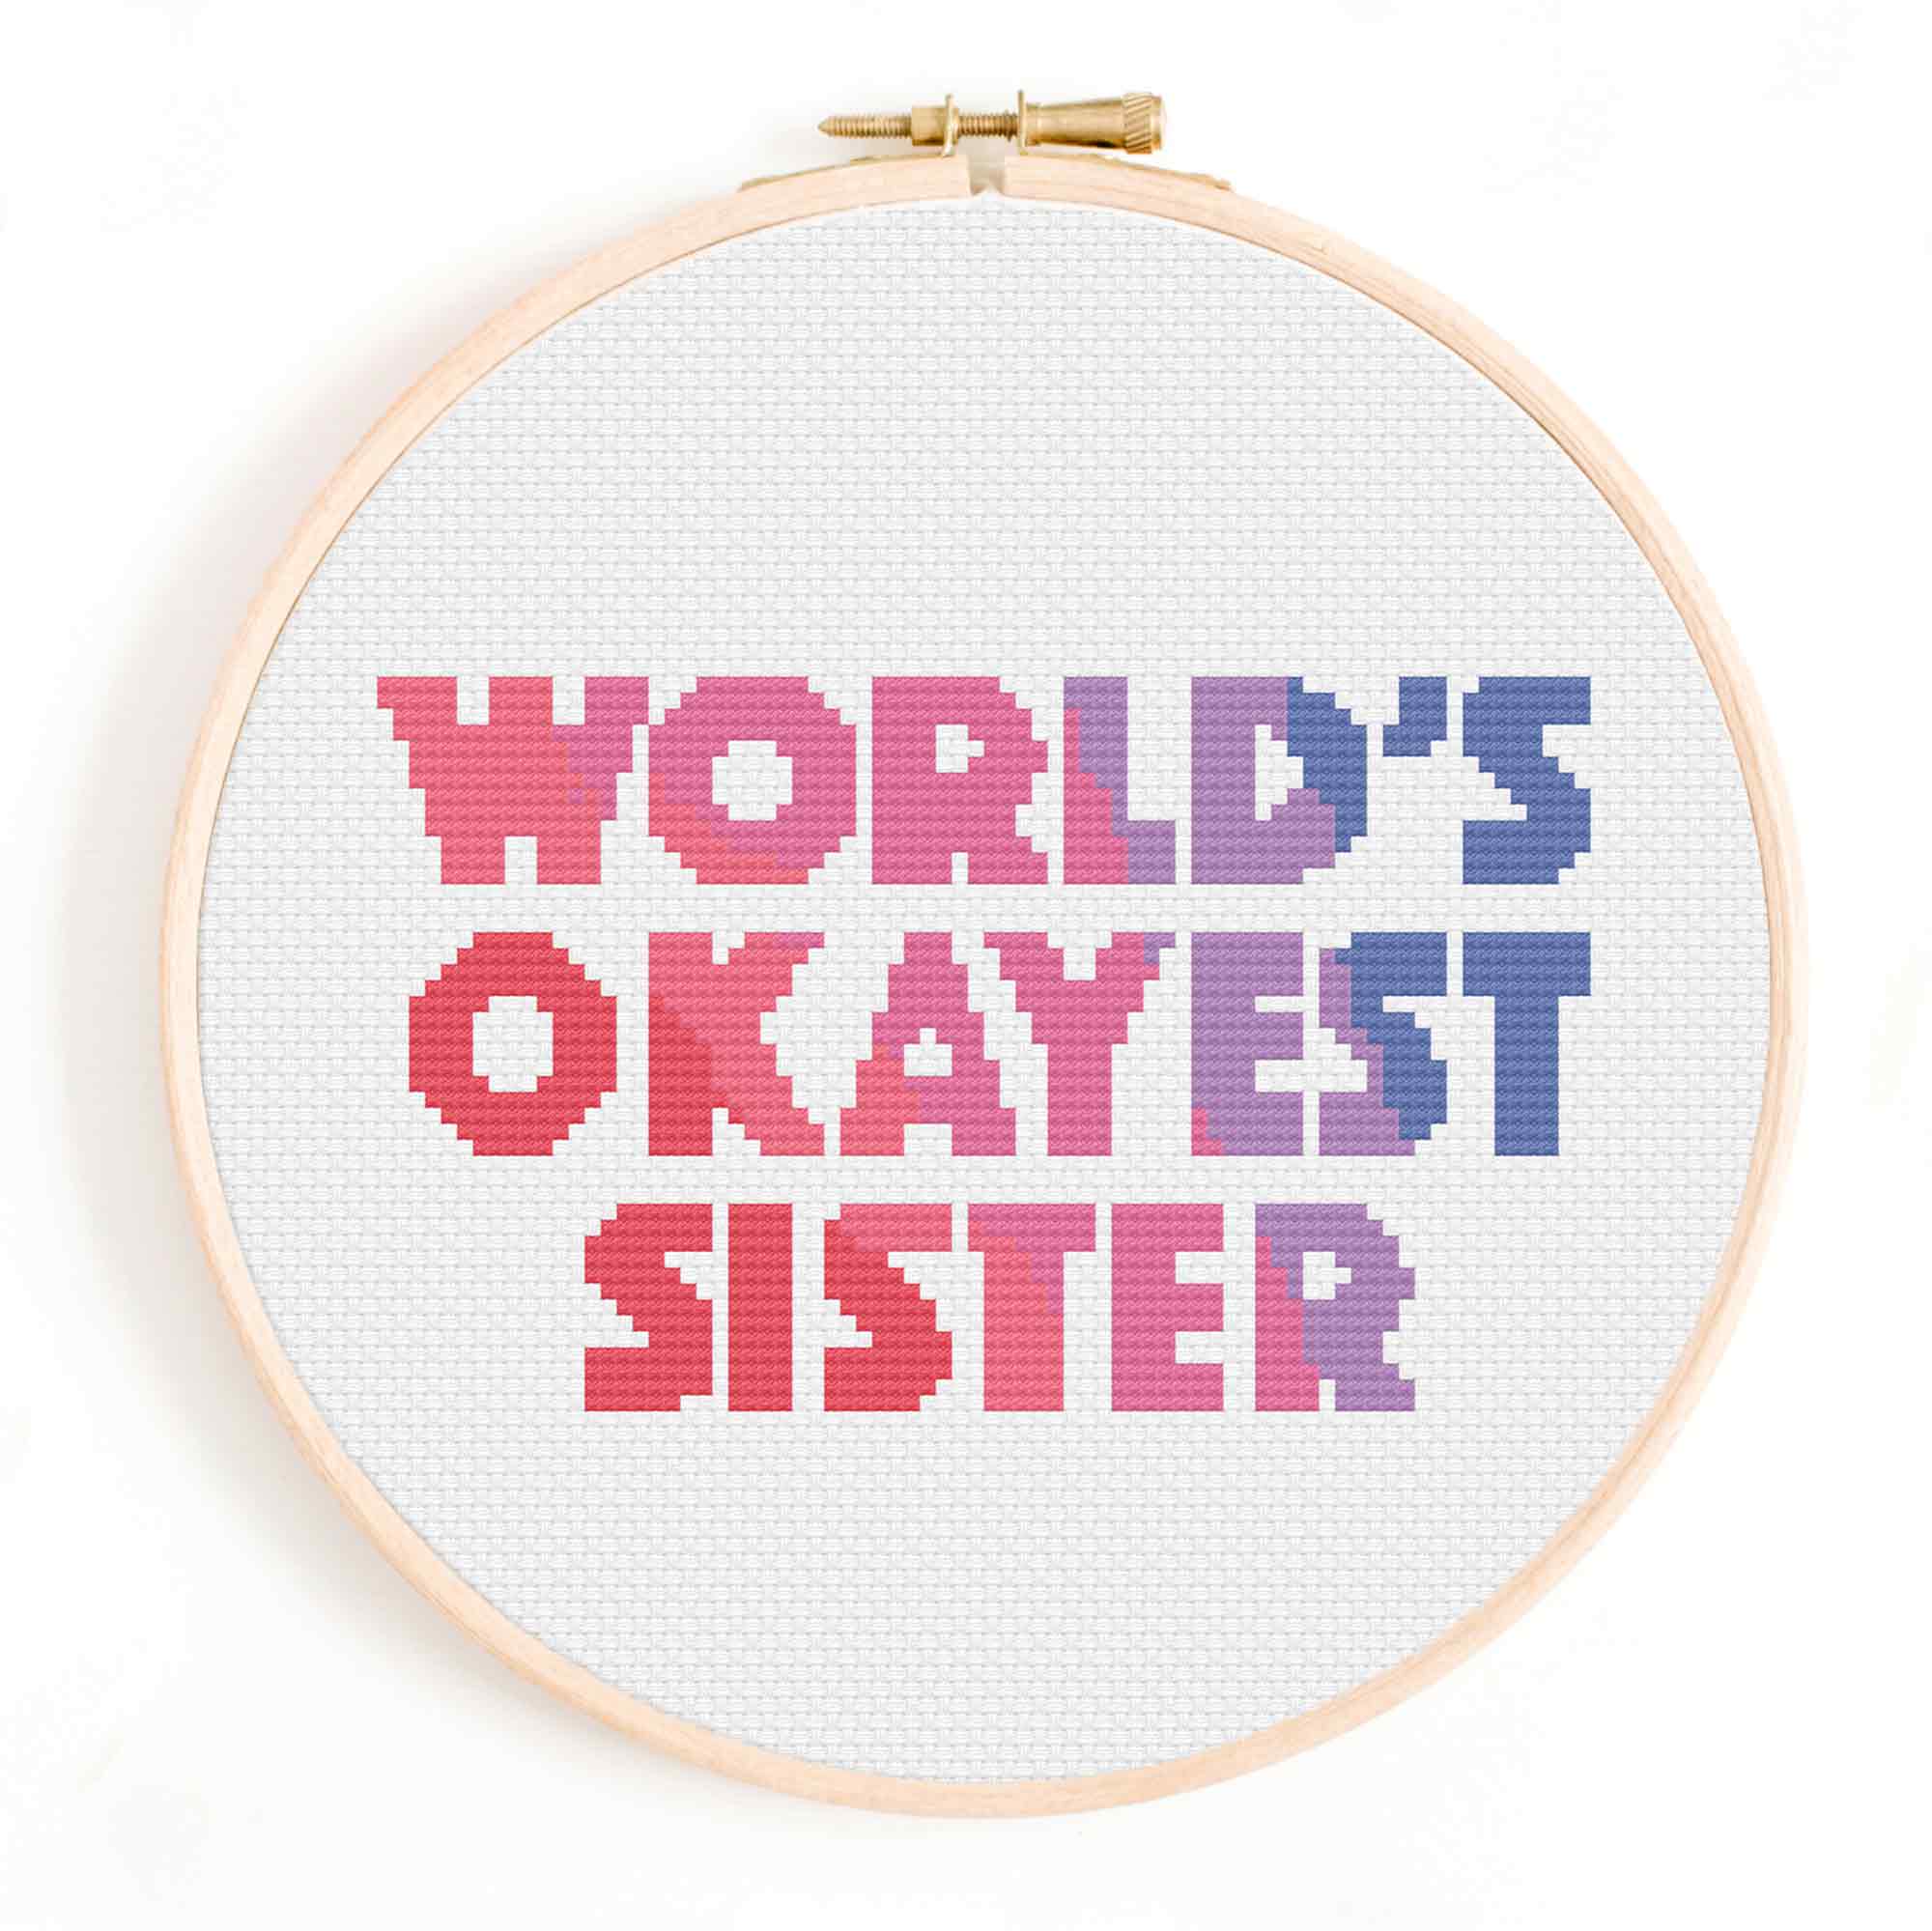 'World's Okayest Sister' Cross Stitch Pattern